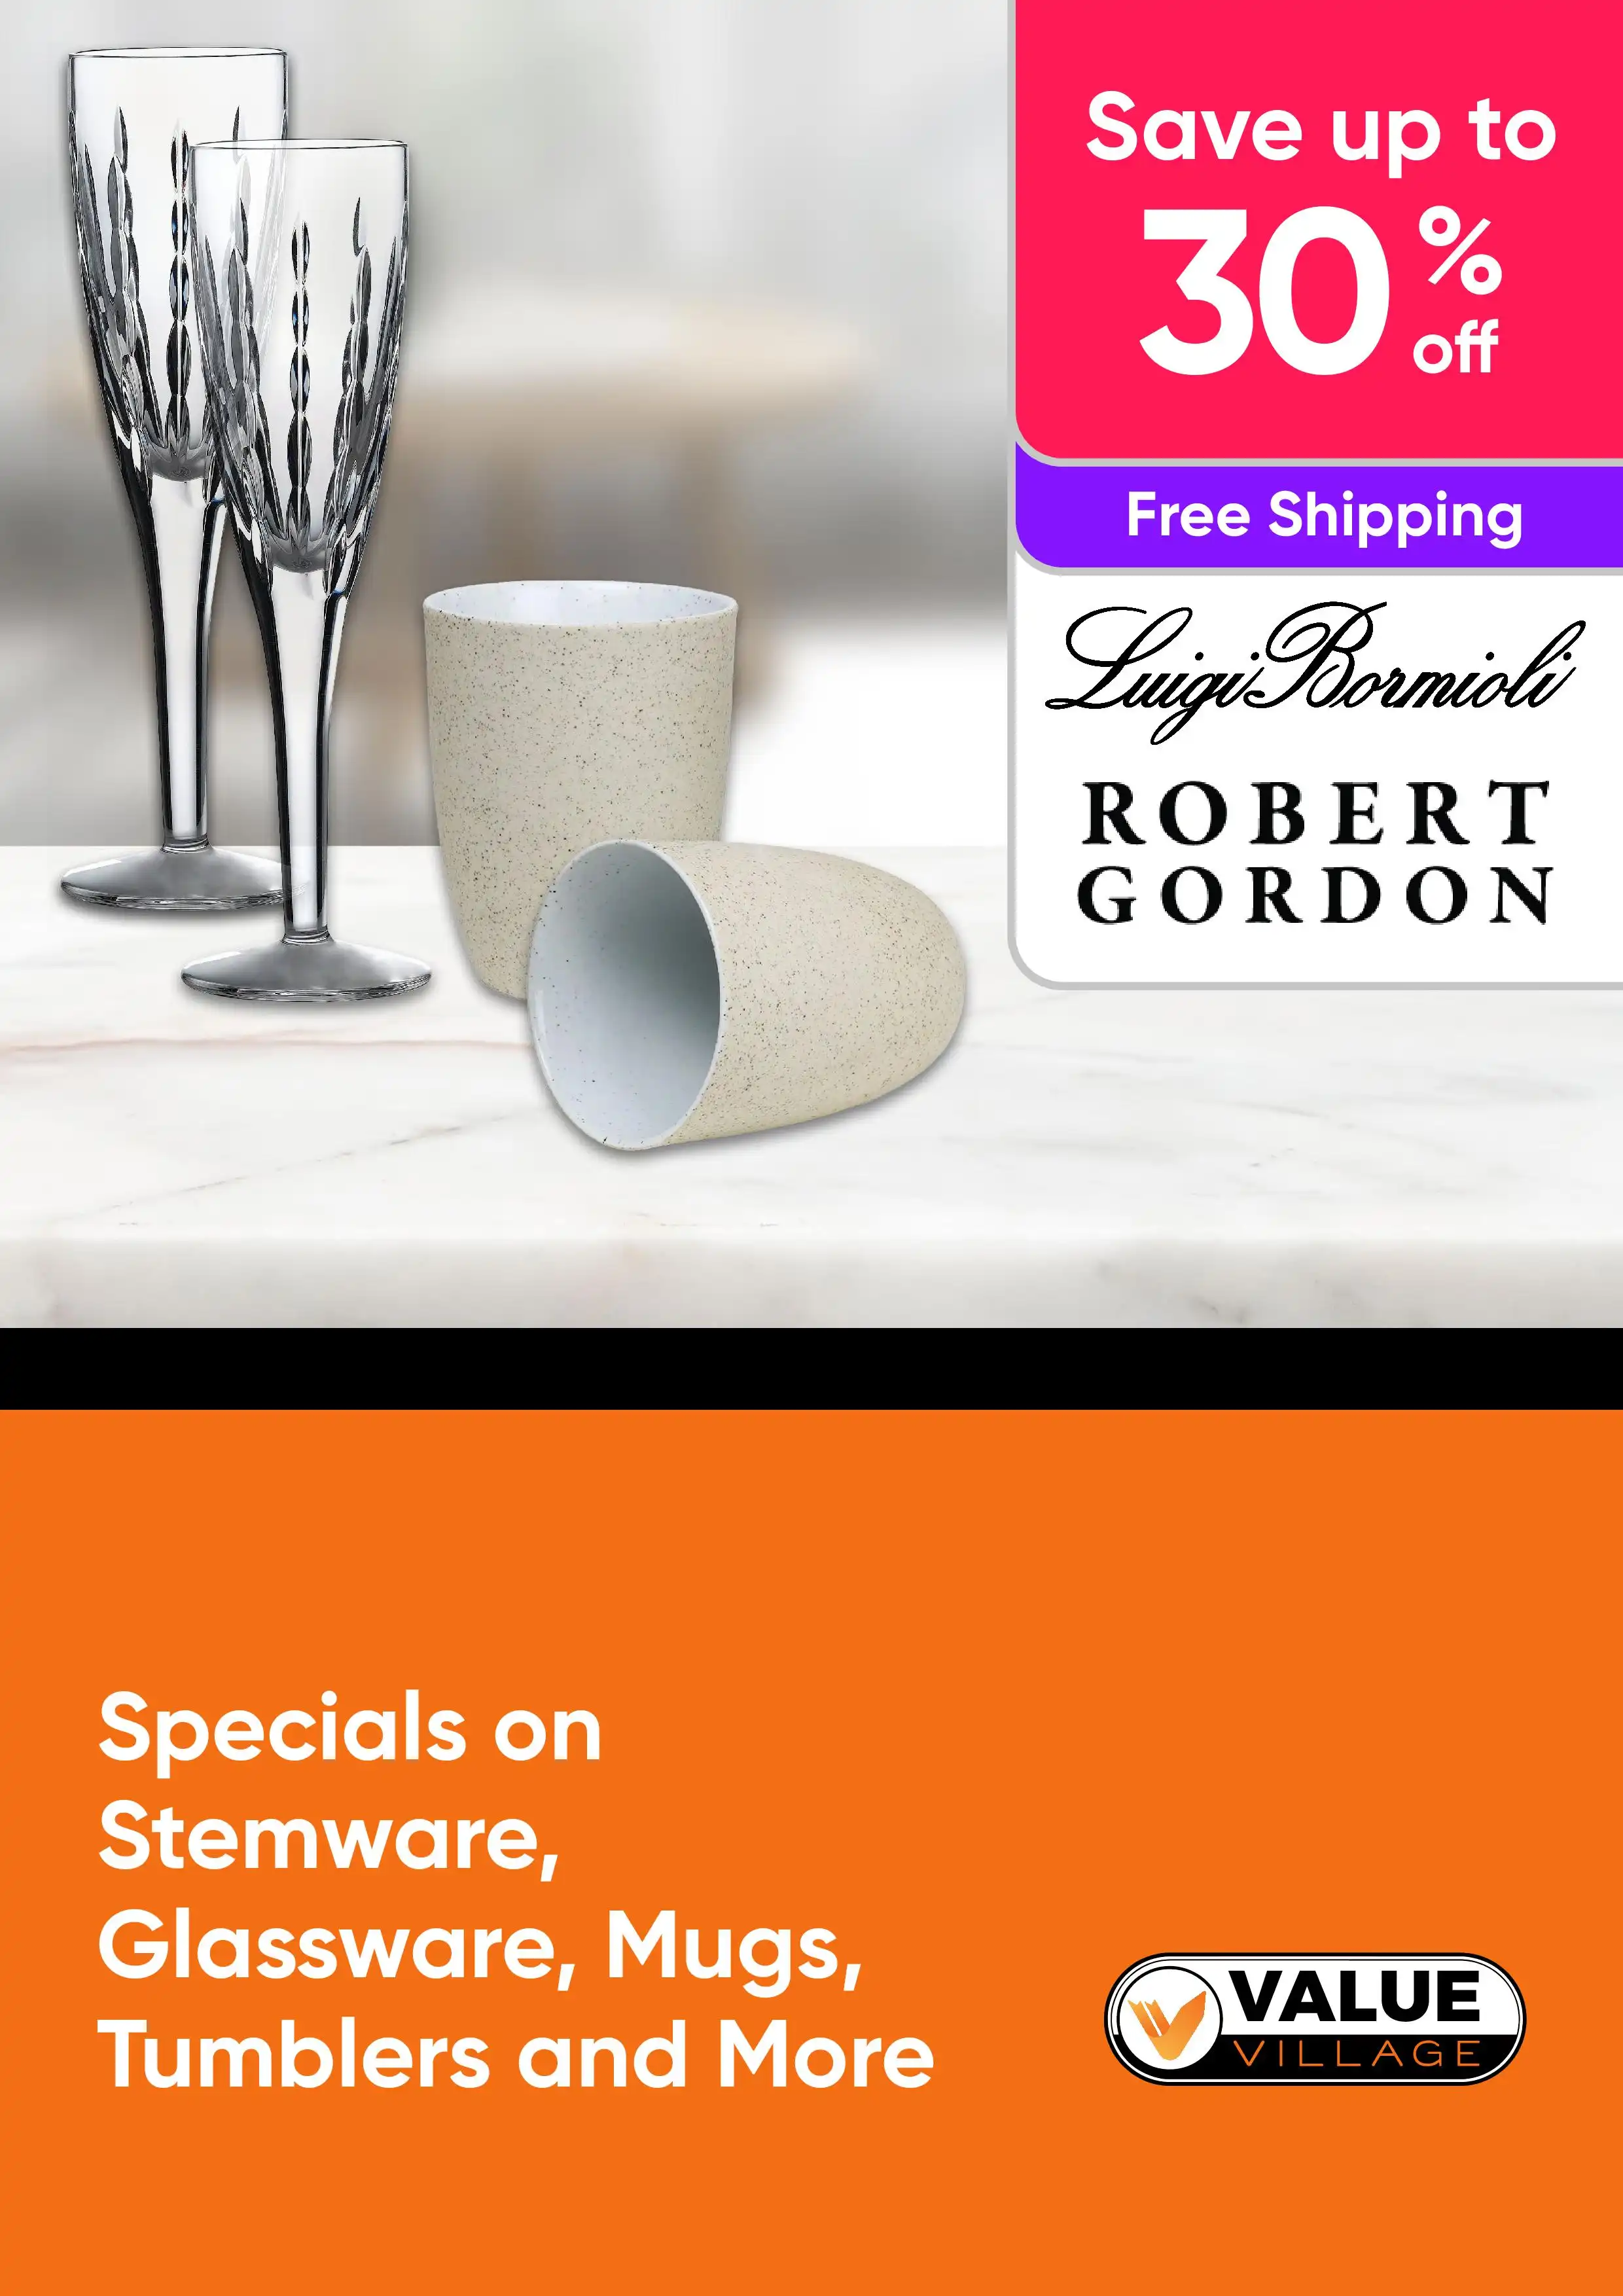 Specials on Stemware, Glassware, Mugs, Tumblers and More - Luigi Bormioli, Robert Gordon - Up to 30% Off 